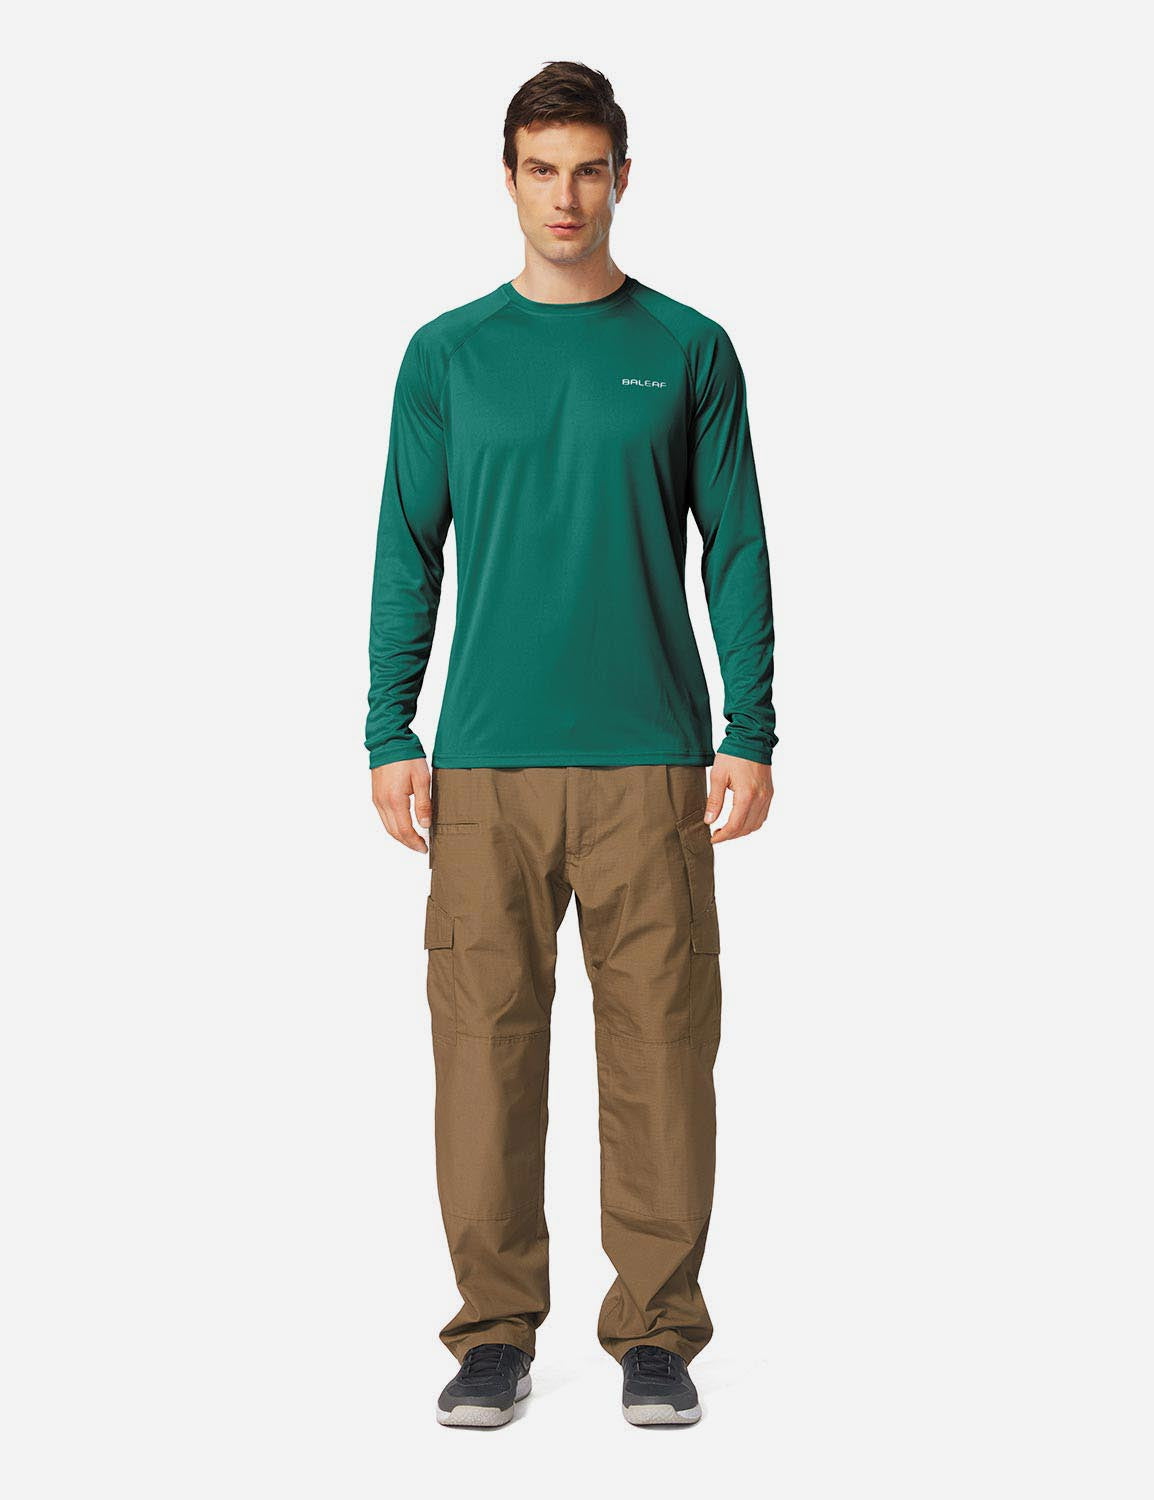 Baleaf Men's UPF50+ Long Sleeved Loose Fit Casual T-Shirt aga002 Emerald Full